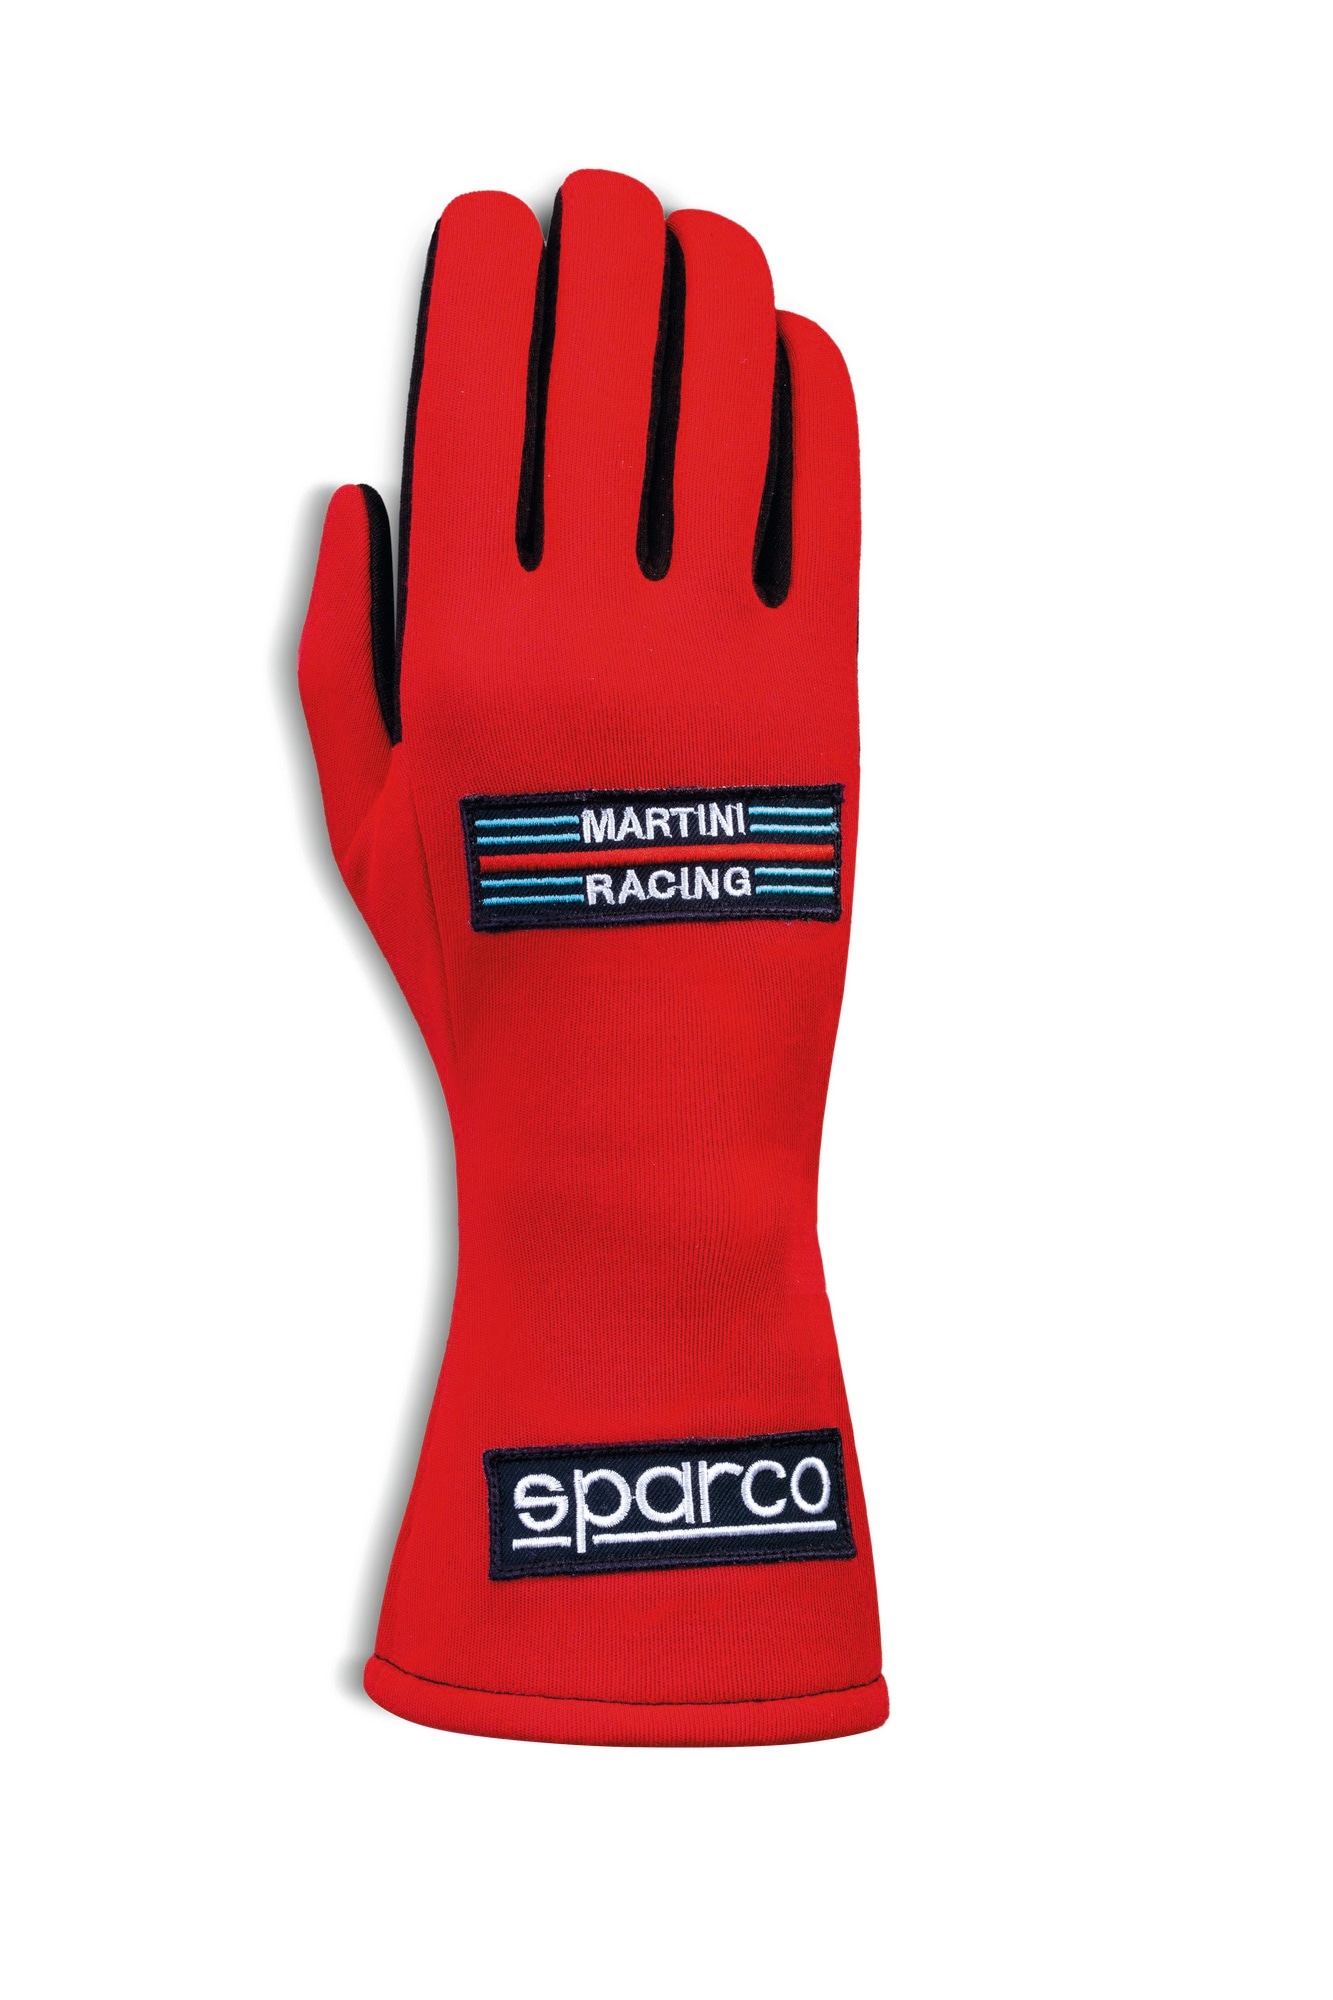 Racing Gloves Sparco Land Martini Racing